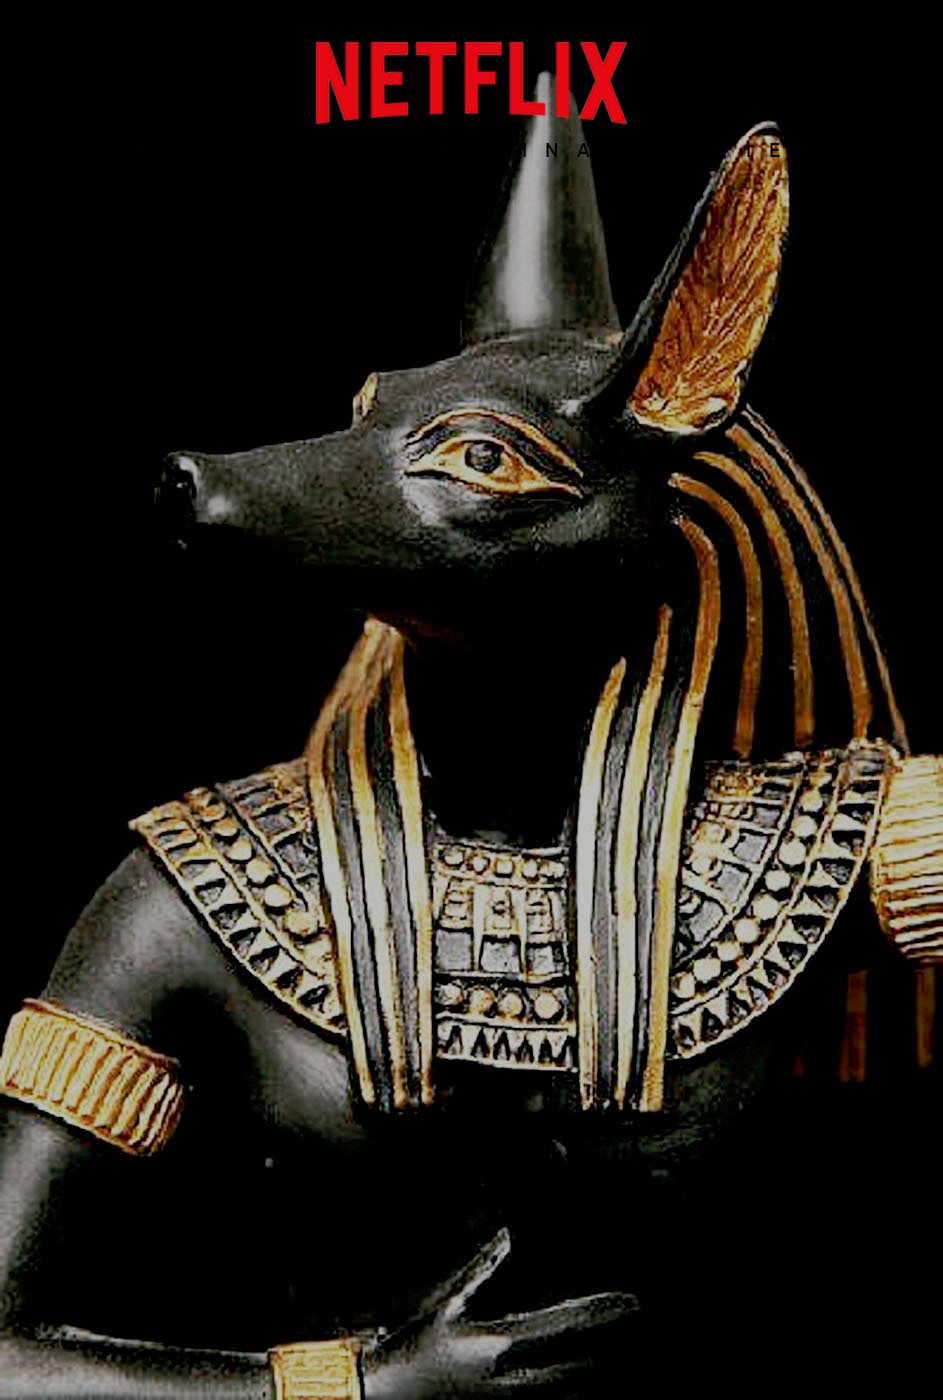 древний египет анубис